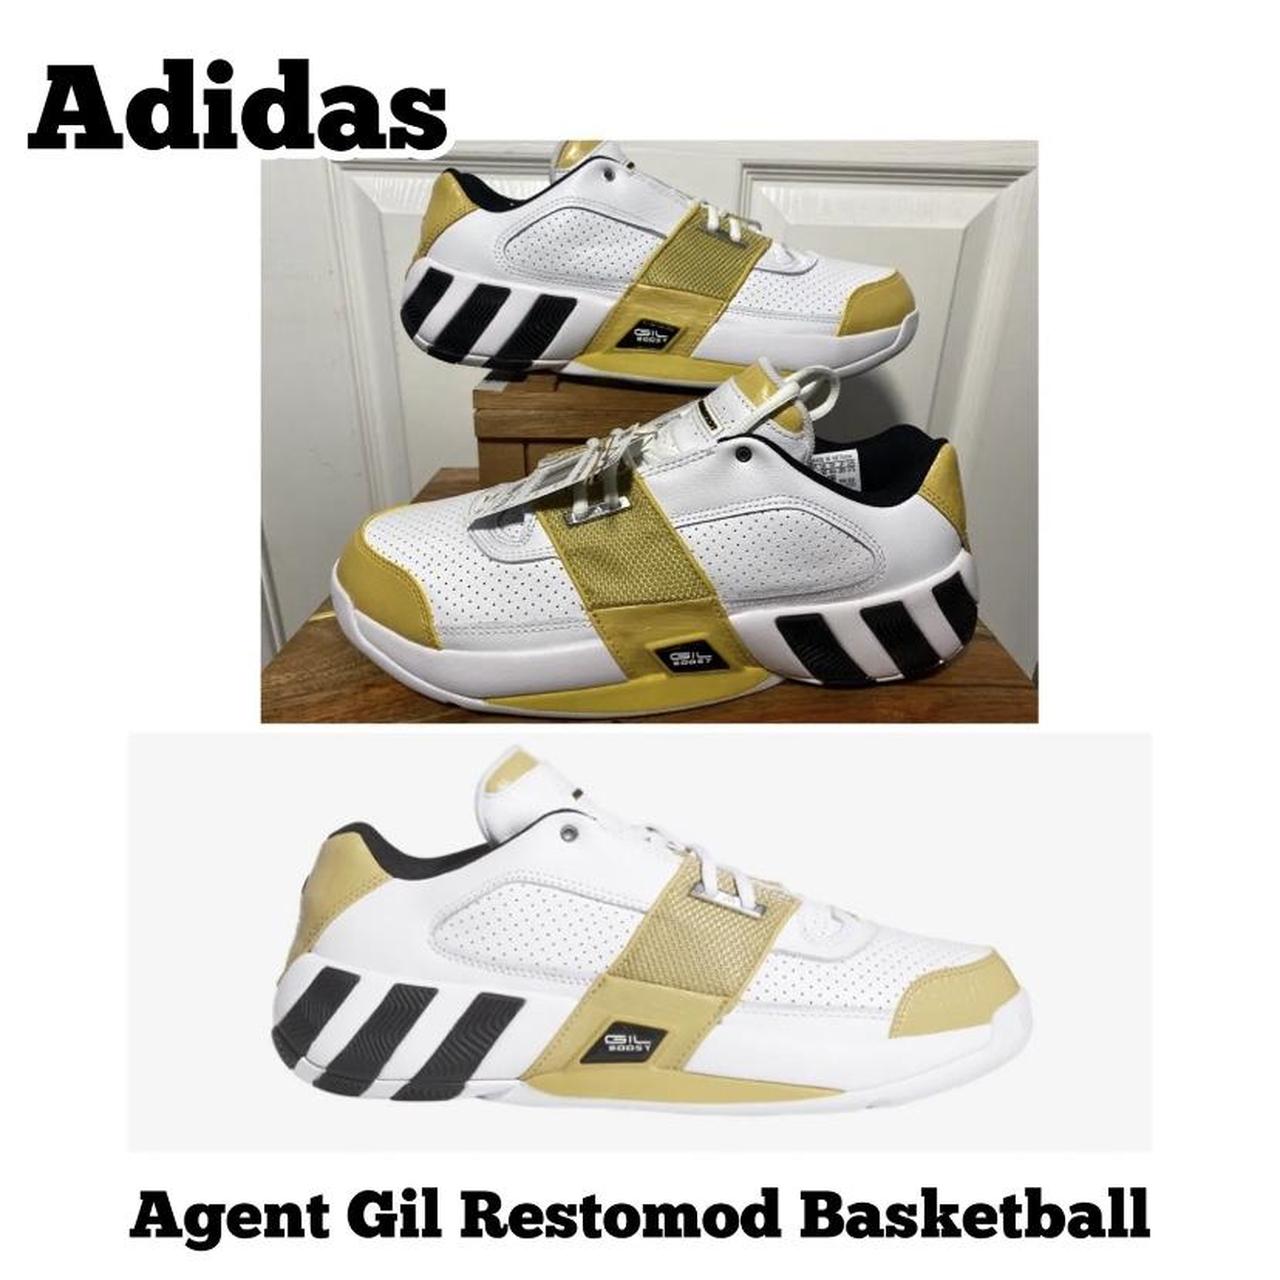 Adidas Originals Agent Gil Restomod Basketball... - Depop